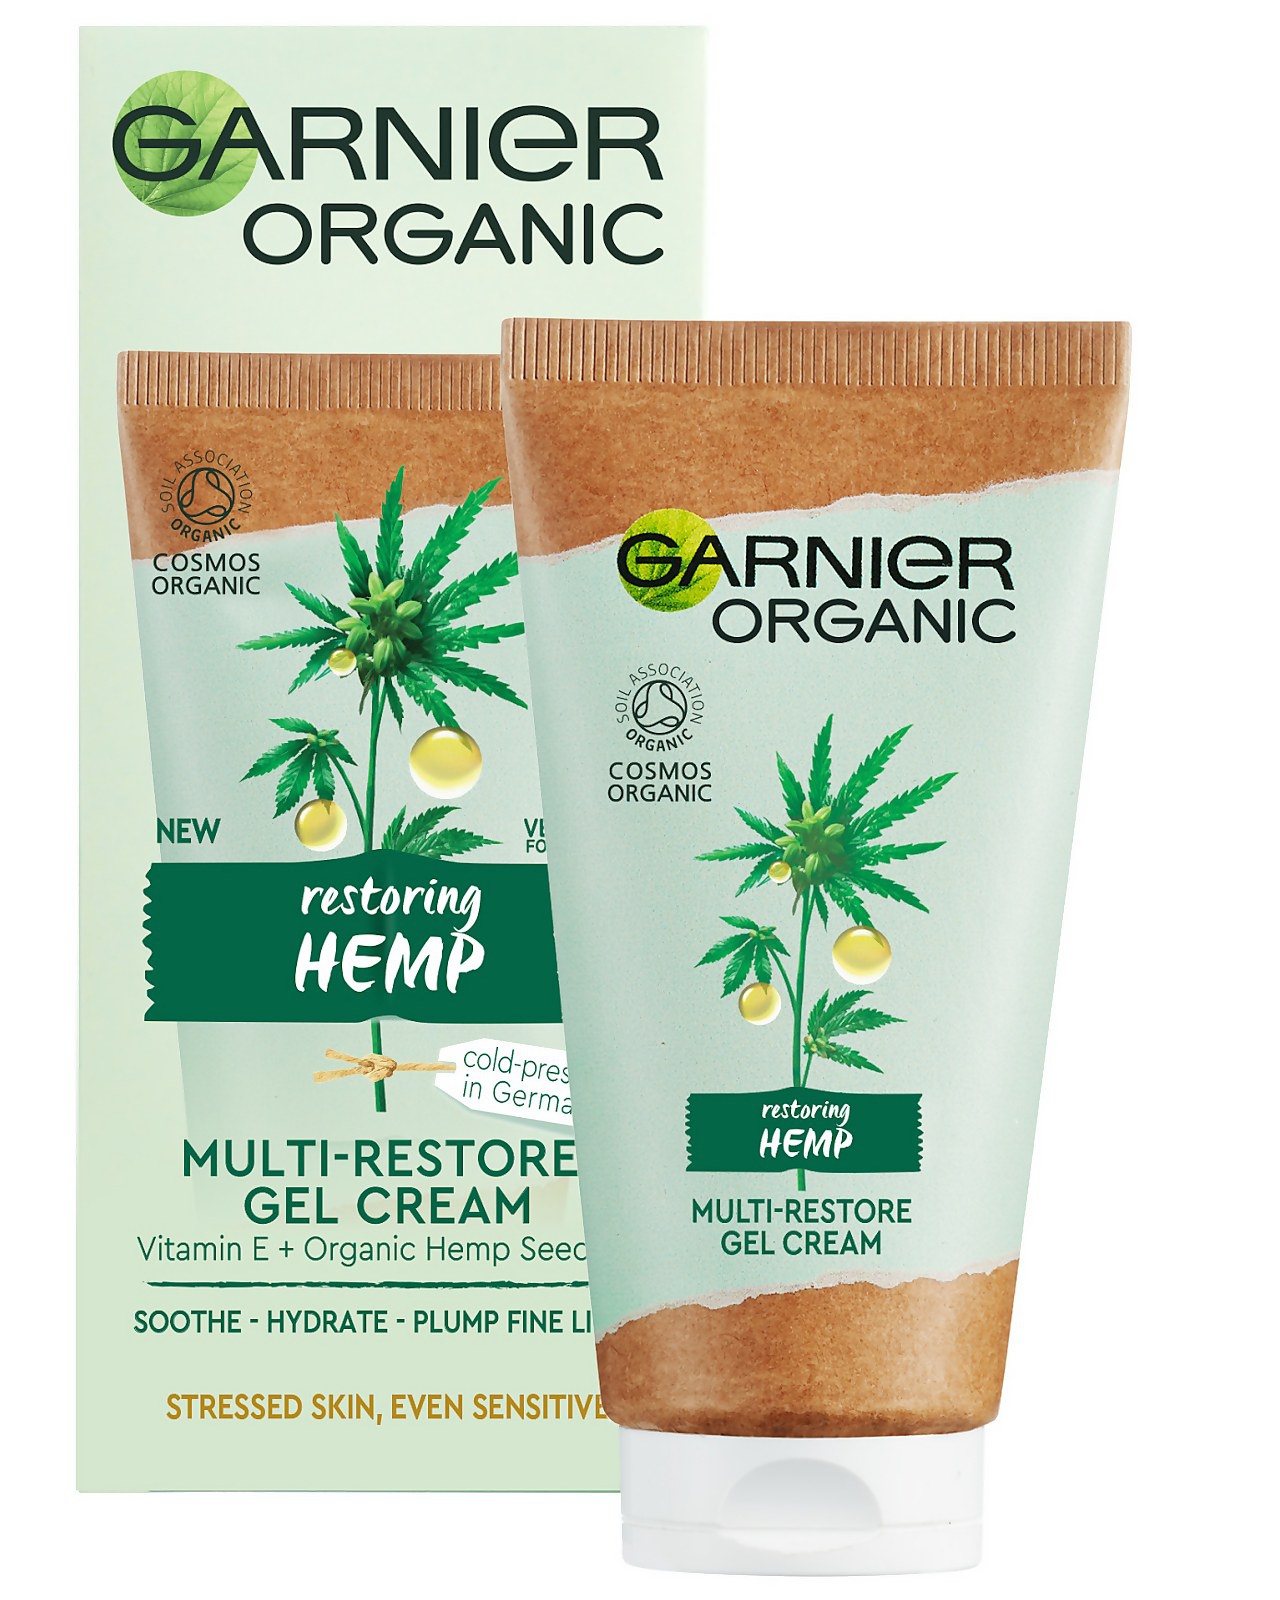 Garnier Organic Hemp Multi-Restore Gel Cream